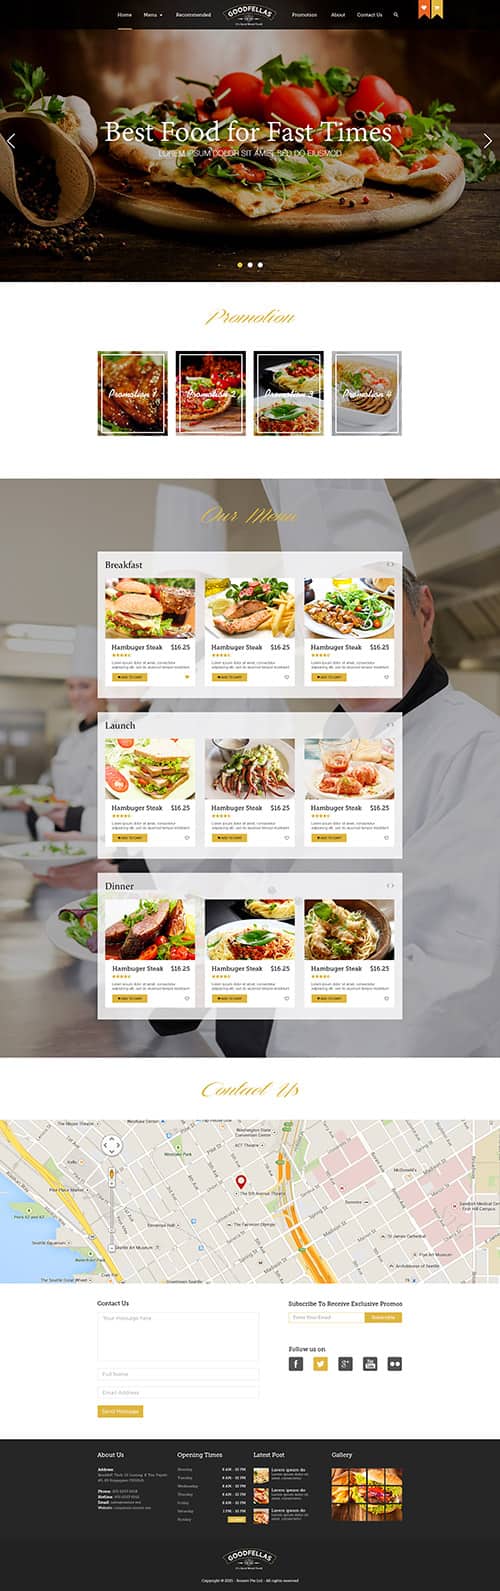 food web design